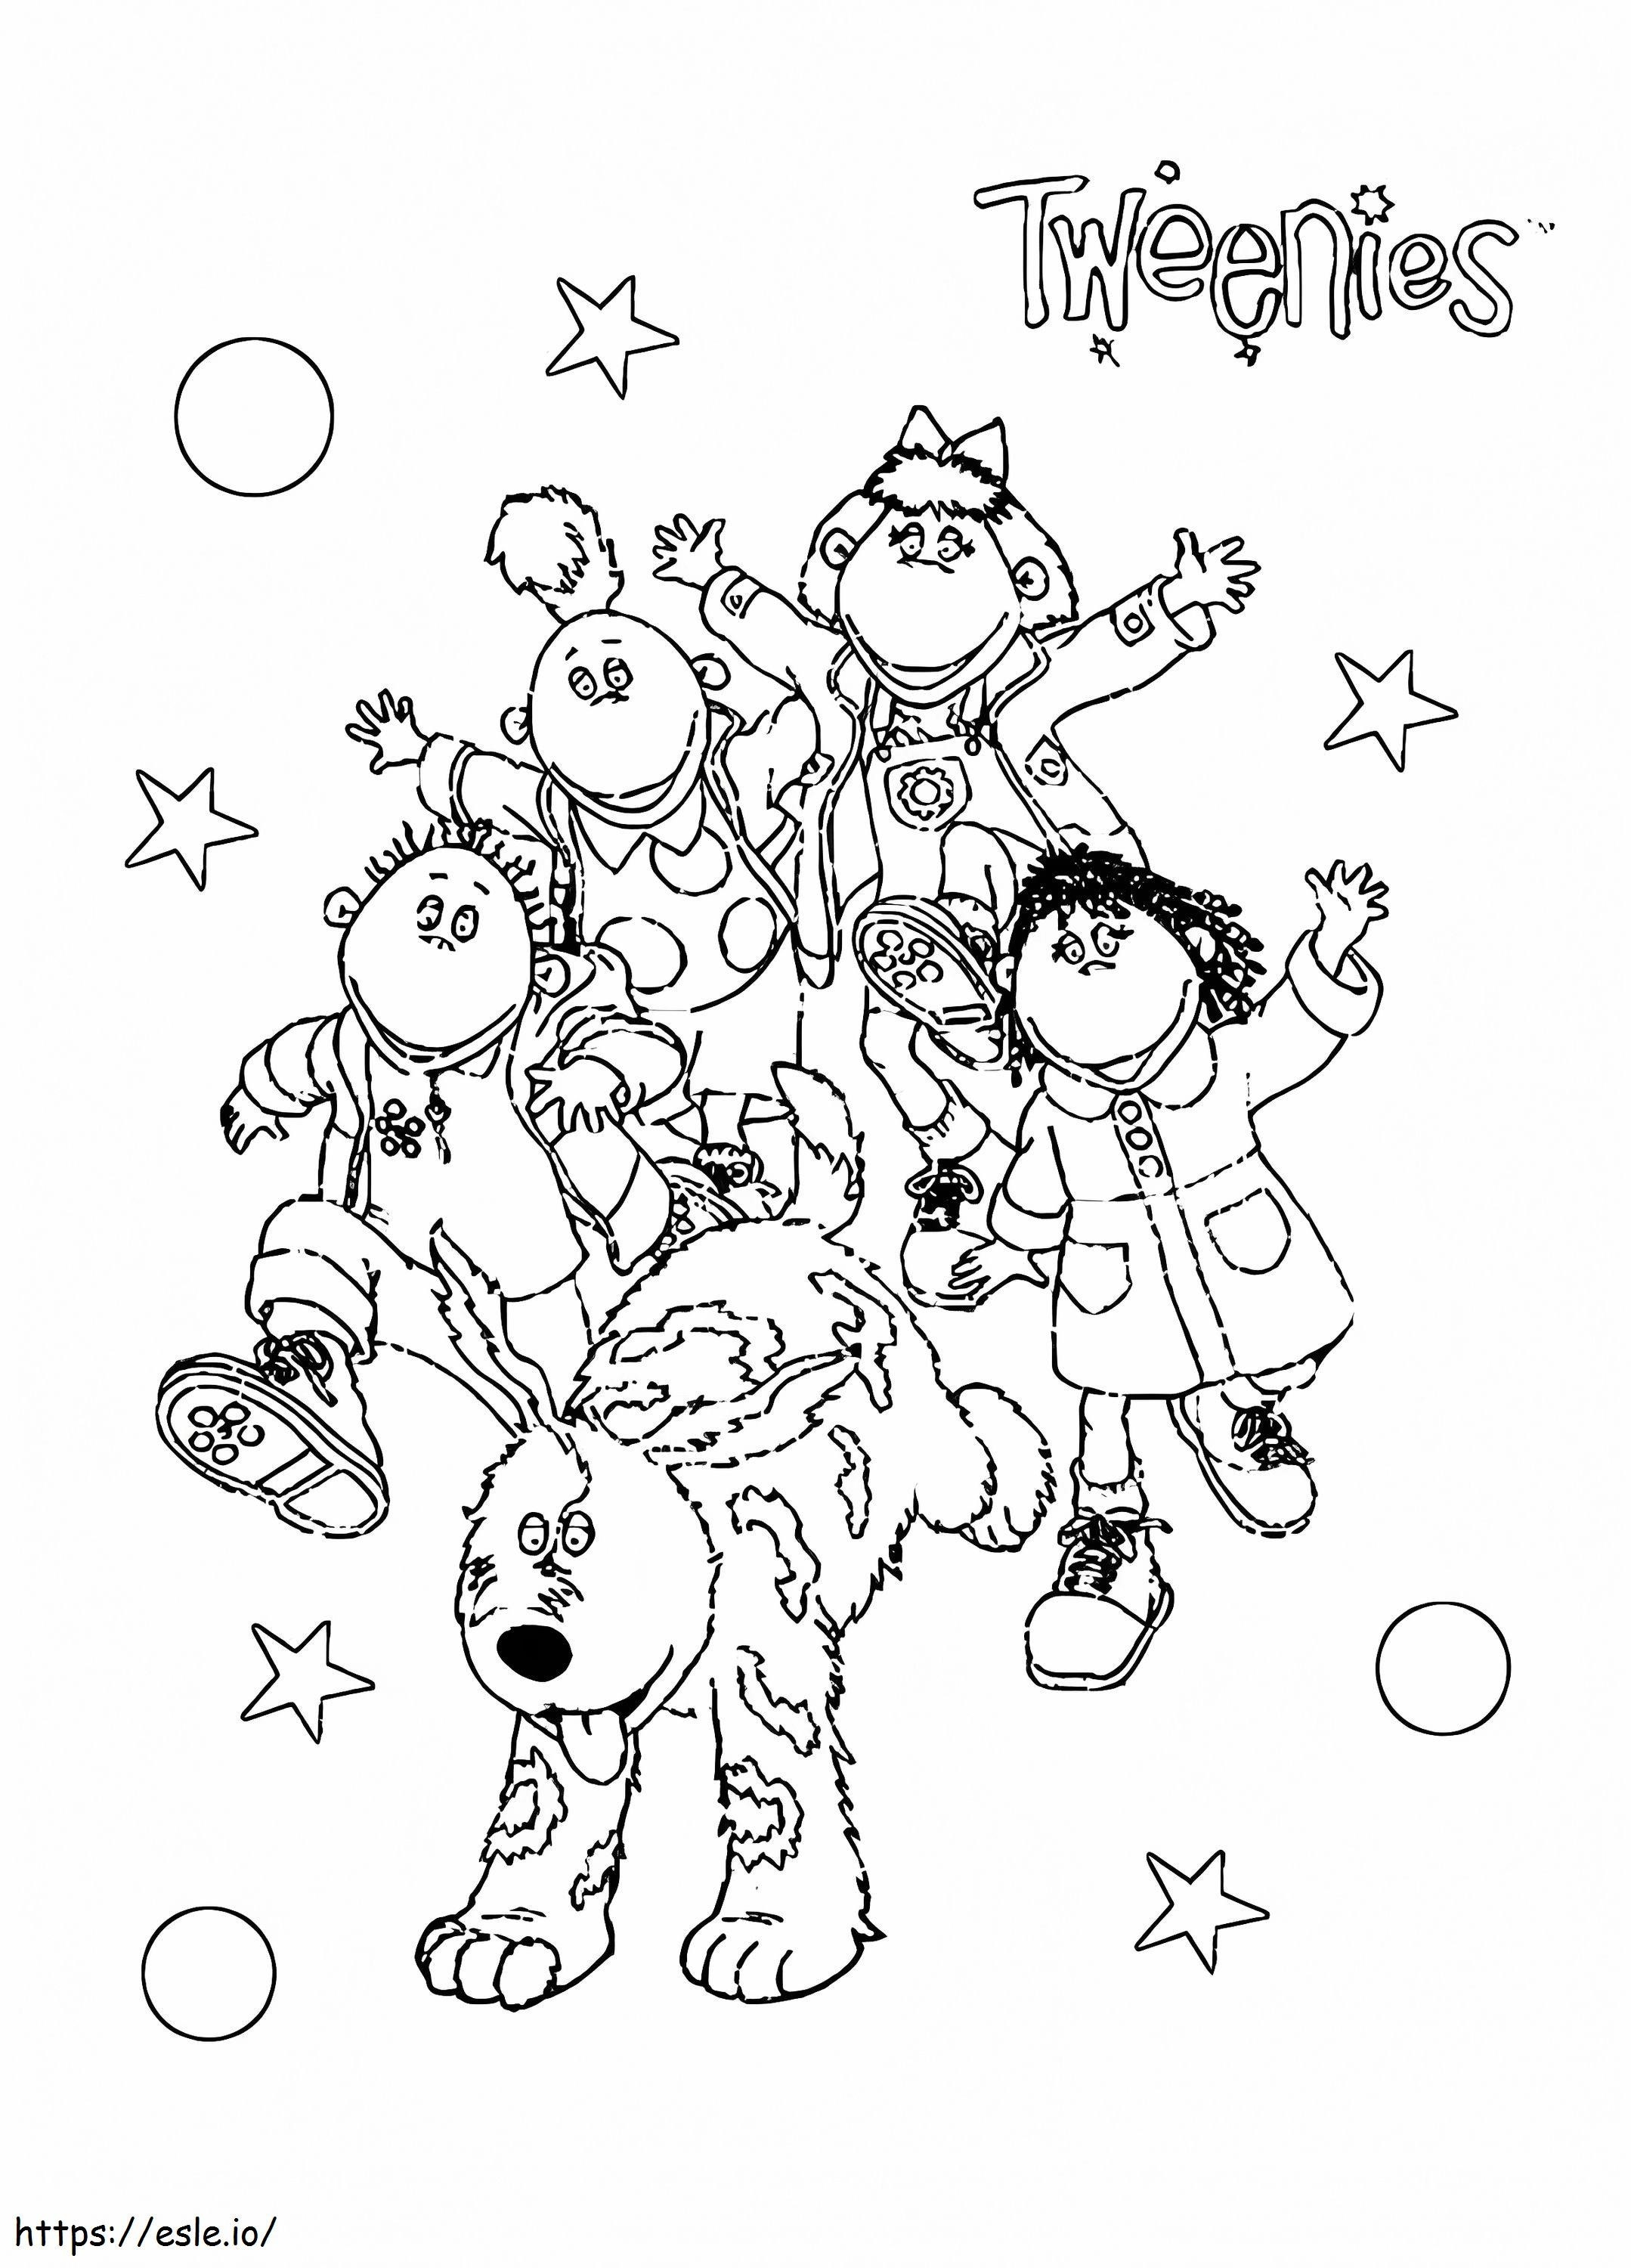 Happy Tweenies Character coloring page